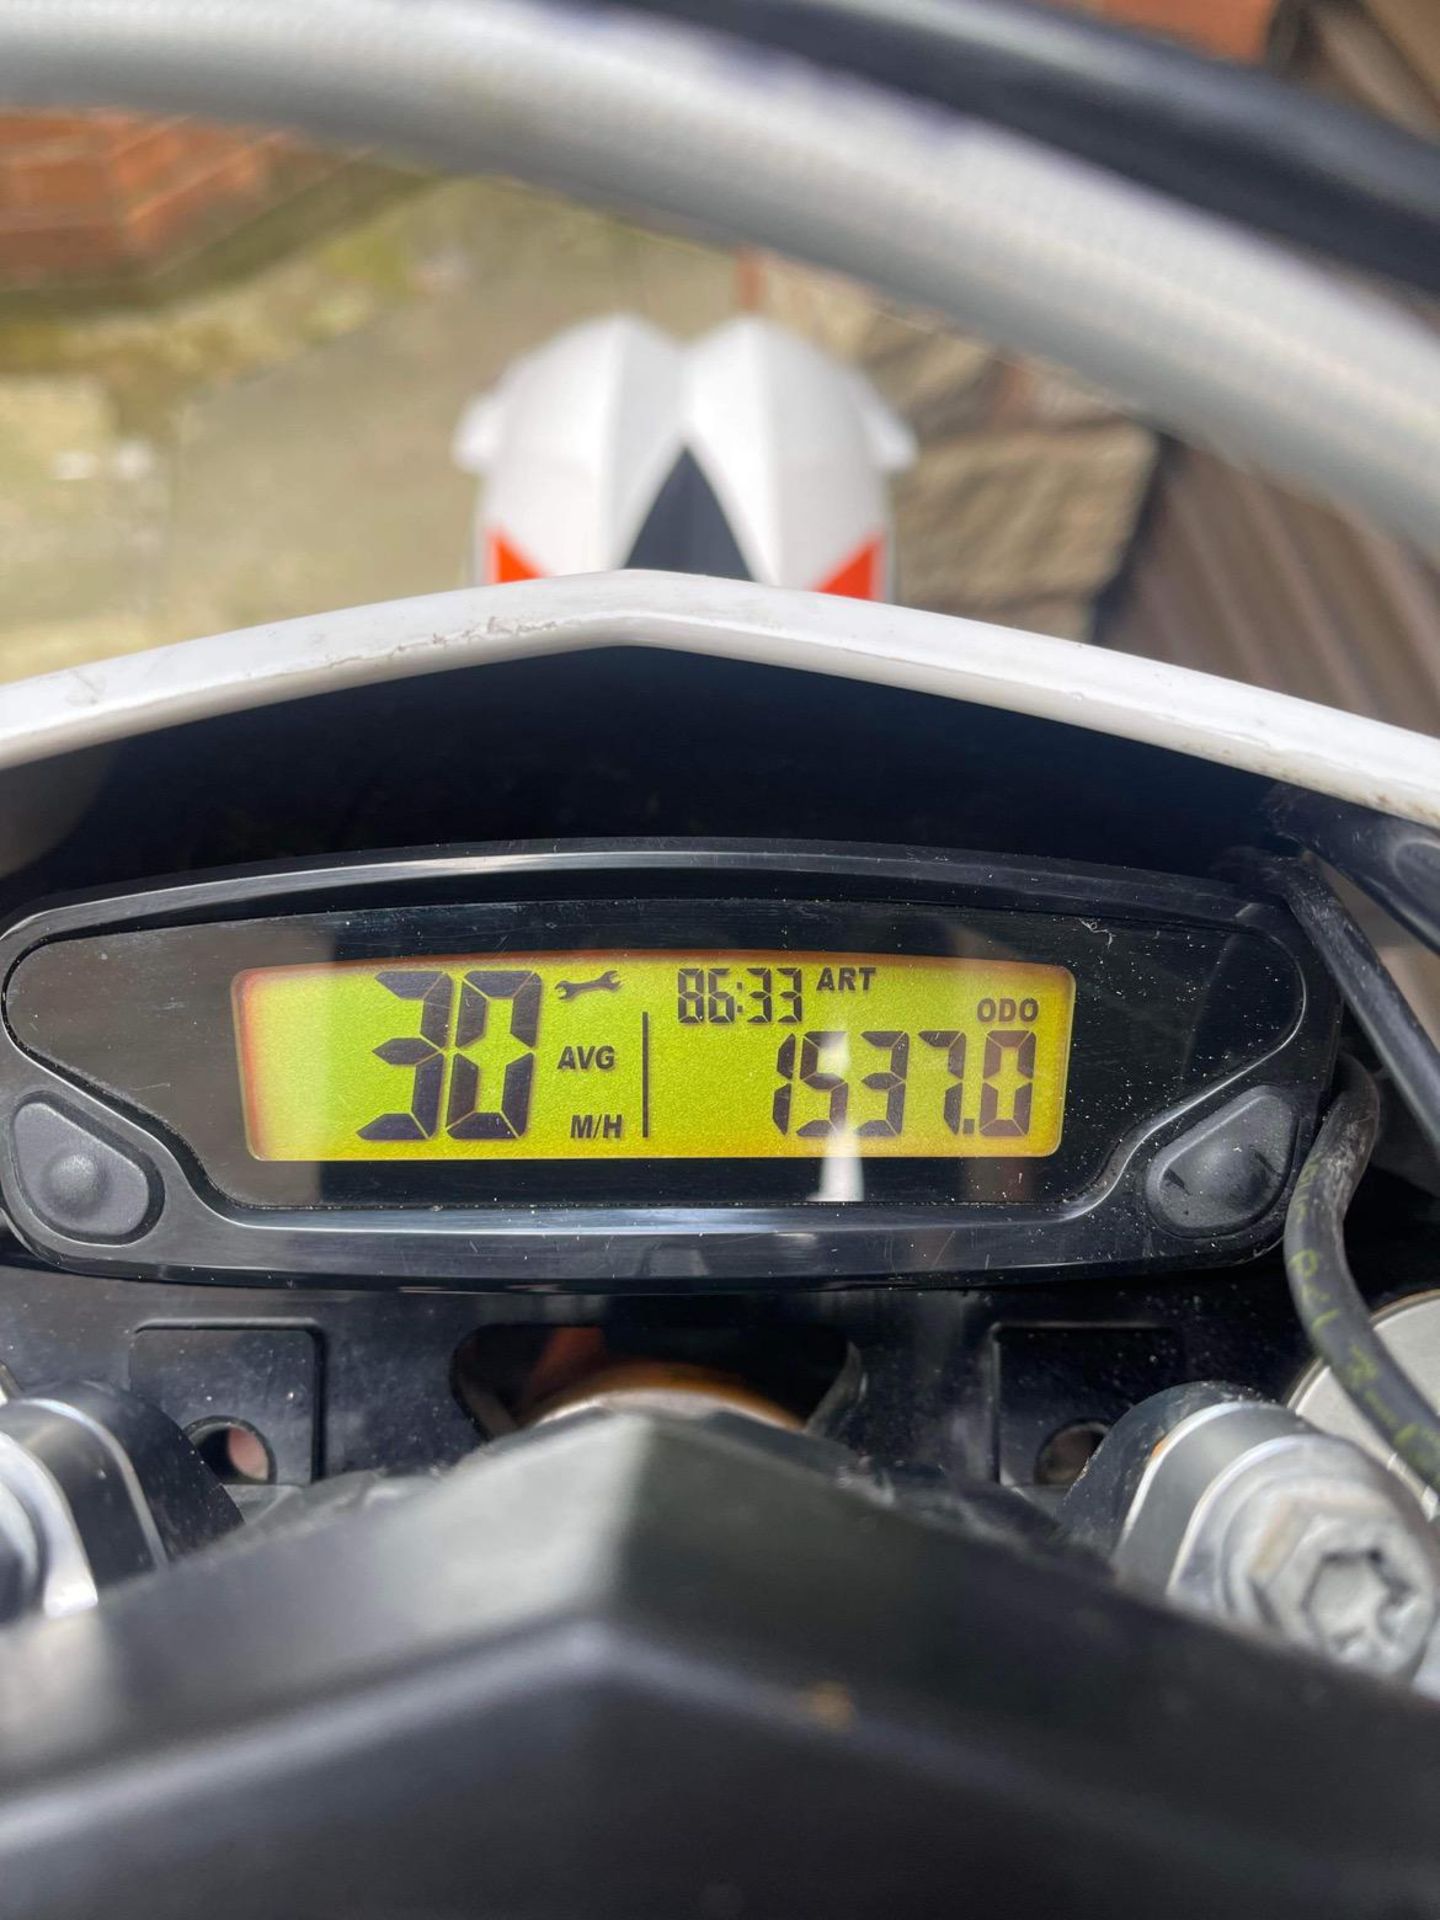 2016 KTM FREERIDE 250R OFF-ROAD MOTORCYCLE, 2 STROKE. ELECTRIC START, 1540 MILES *NO VAT* - Image 11 of 18